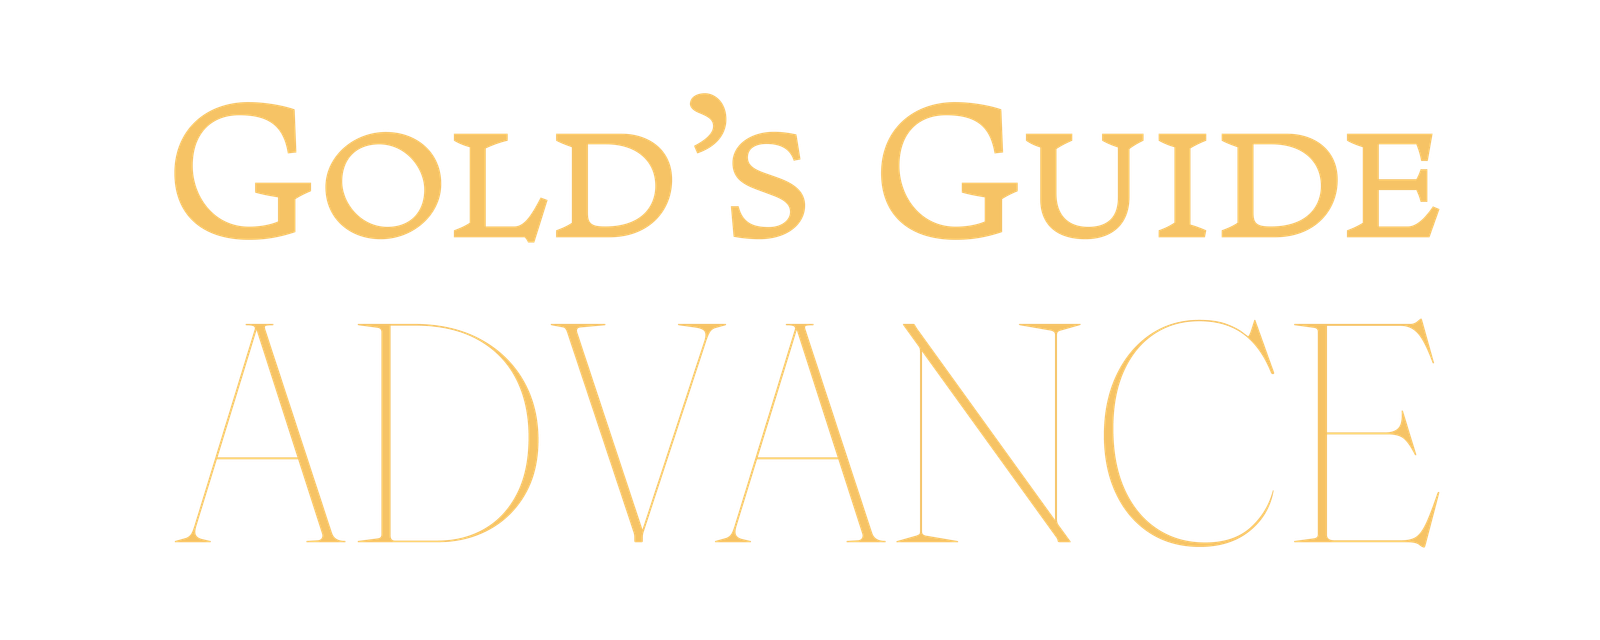 Gold’s Guide Advance logo